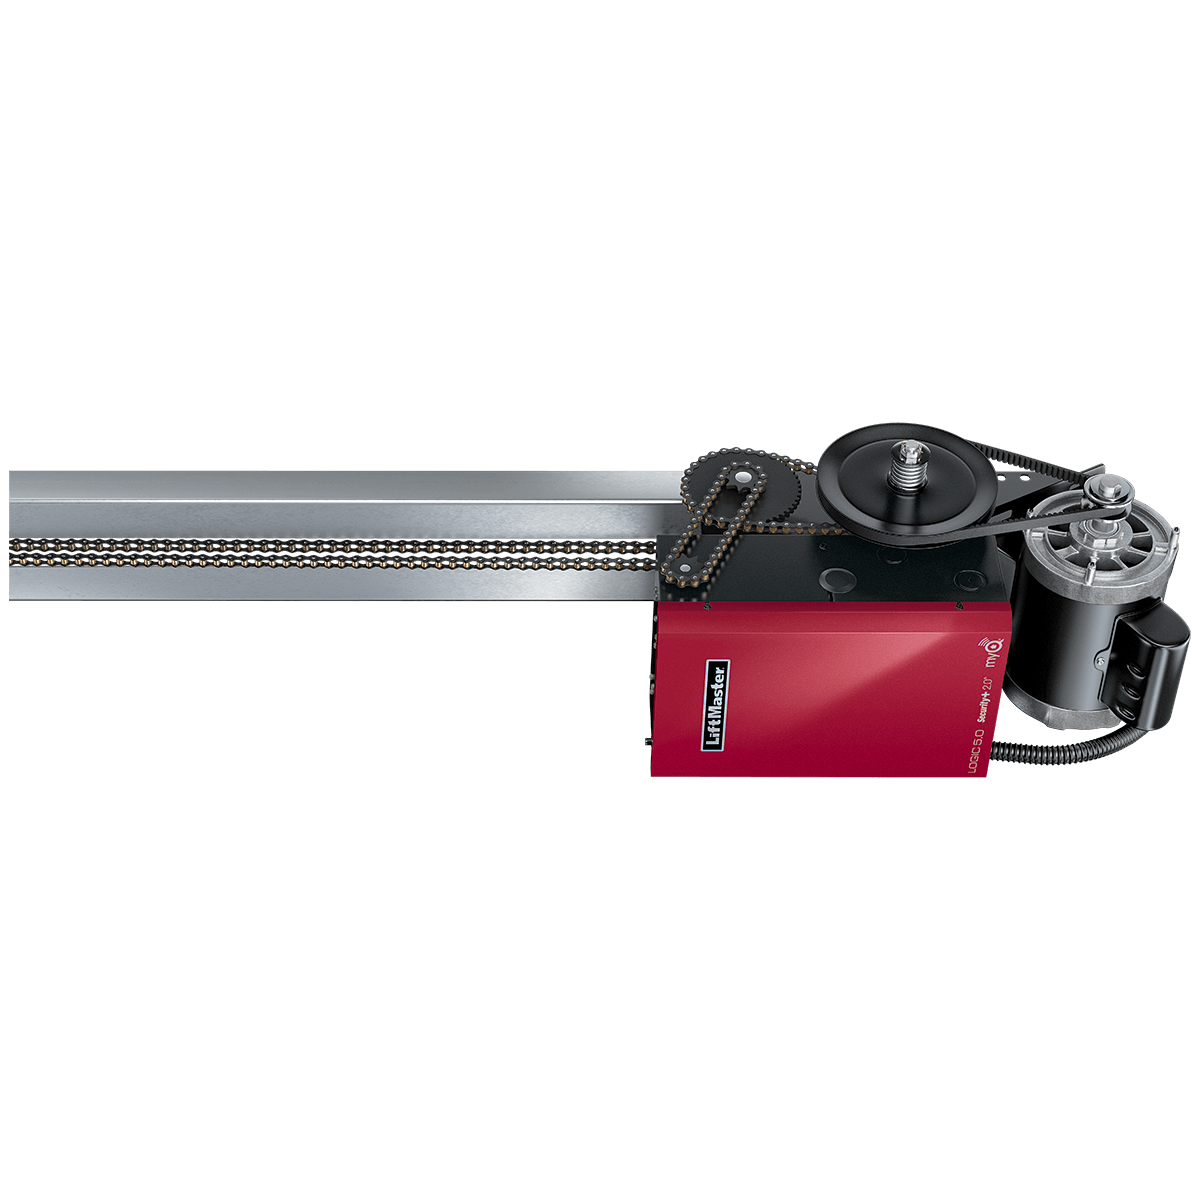 LiftMaster Heavy Industrial-Duty Slide Operator | Amelia Overhead Doors